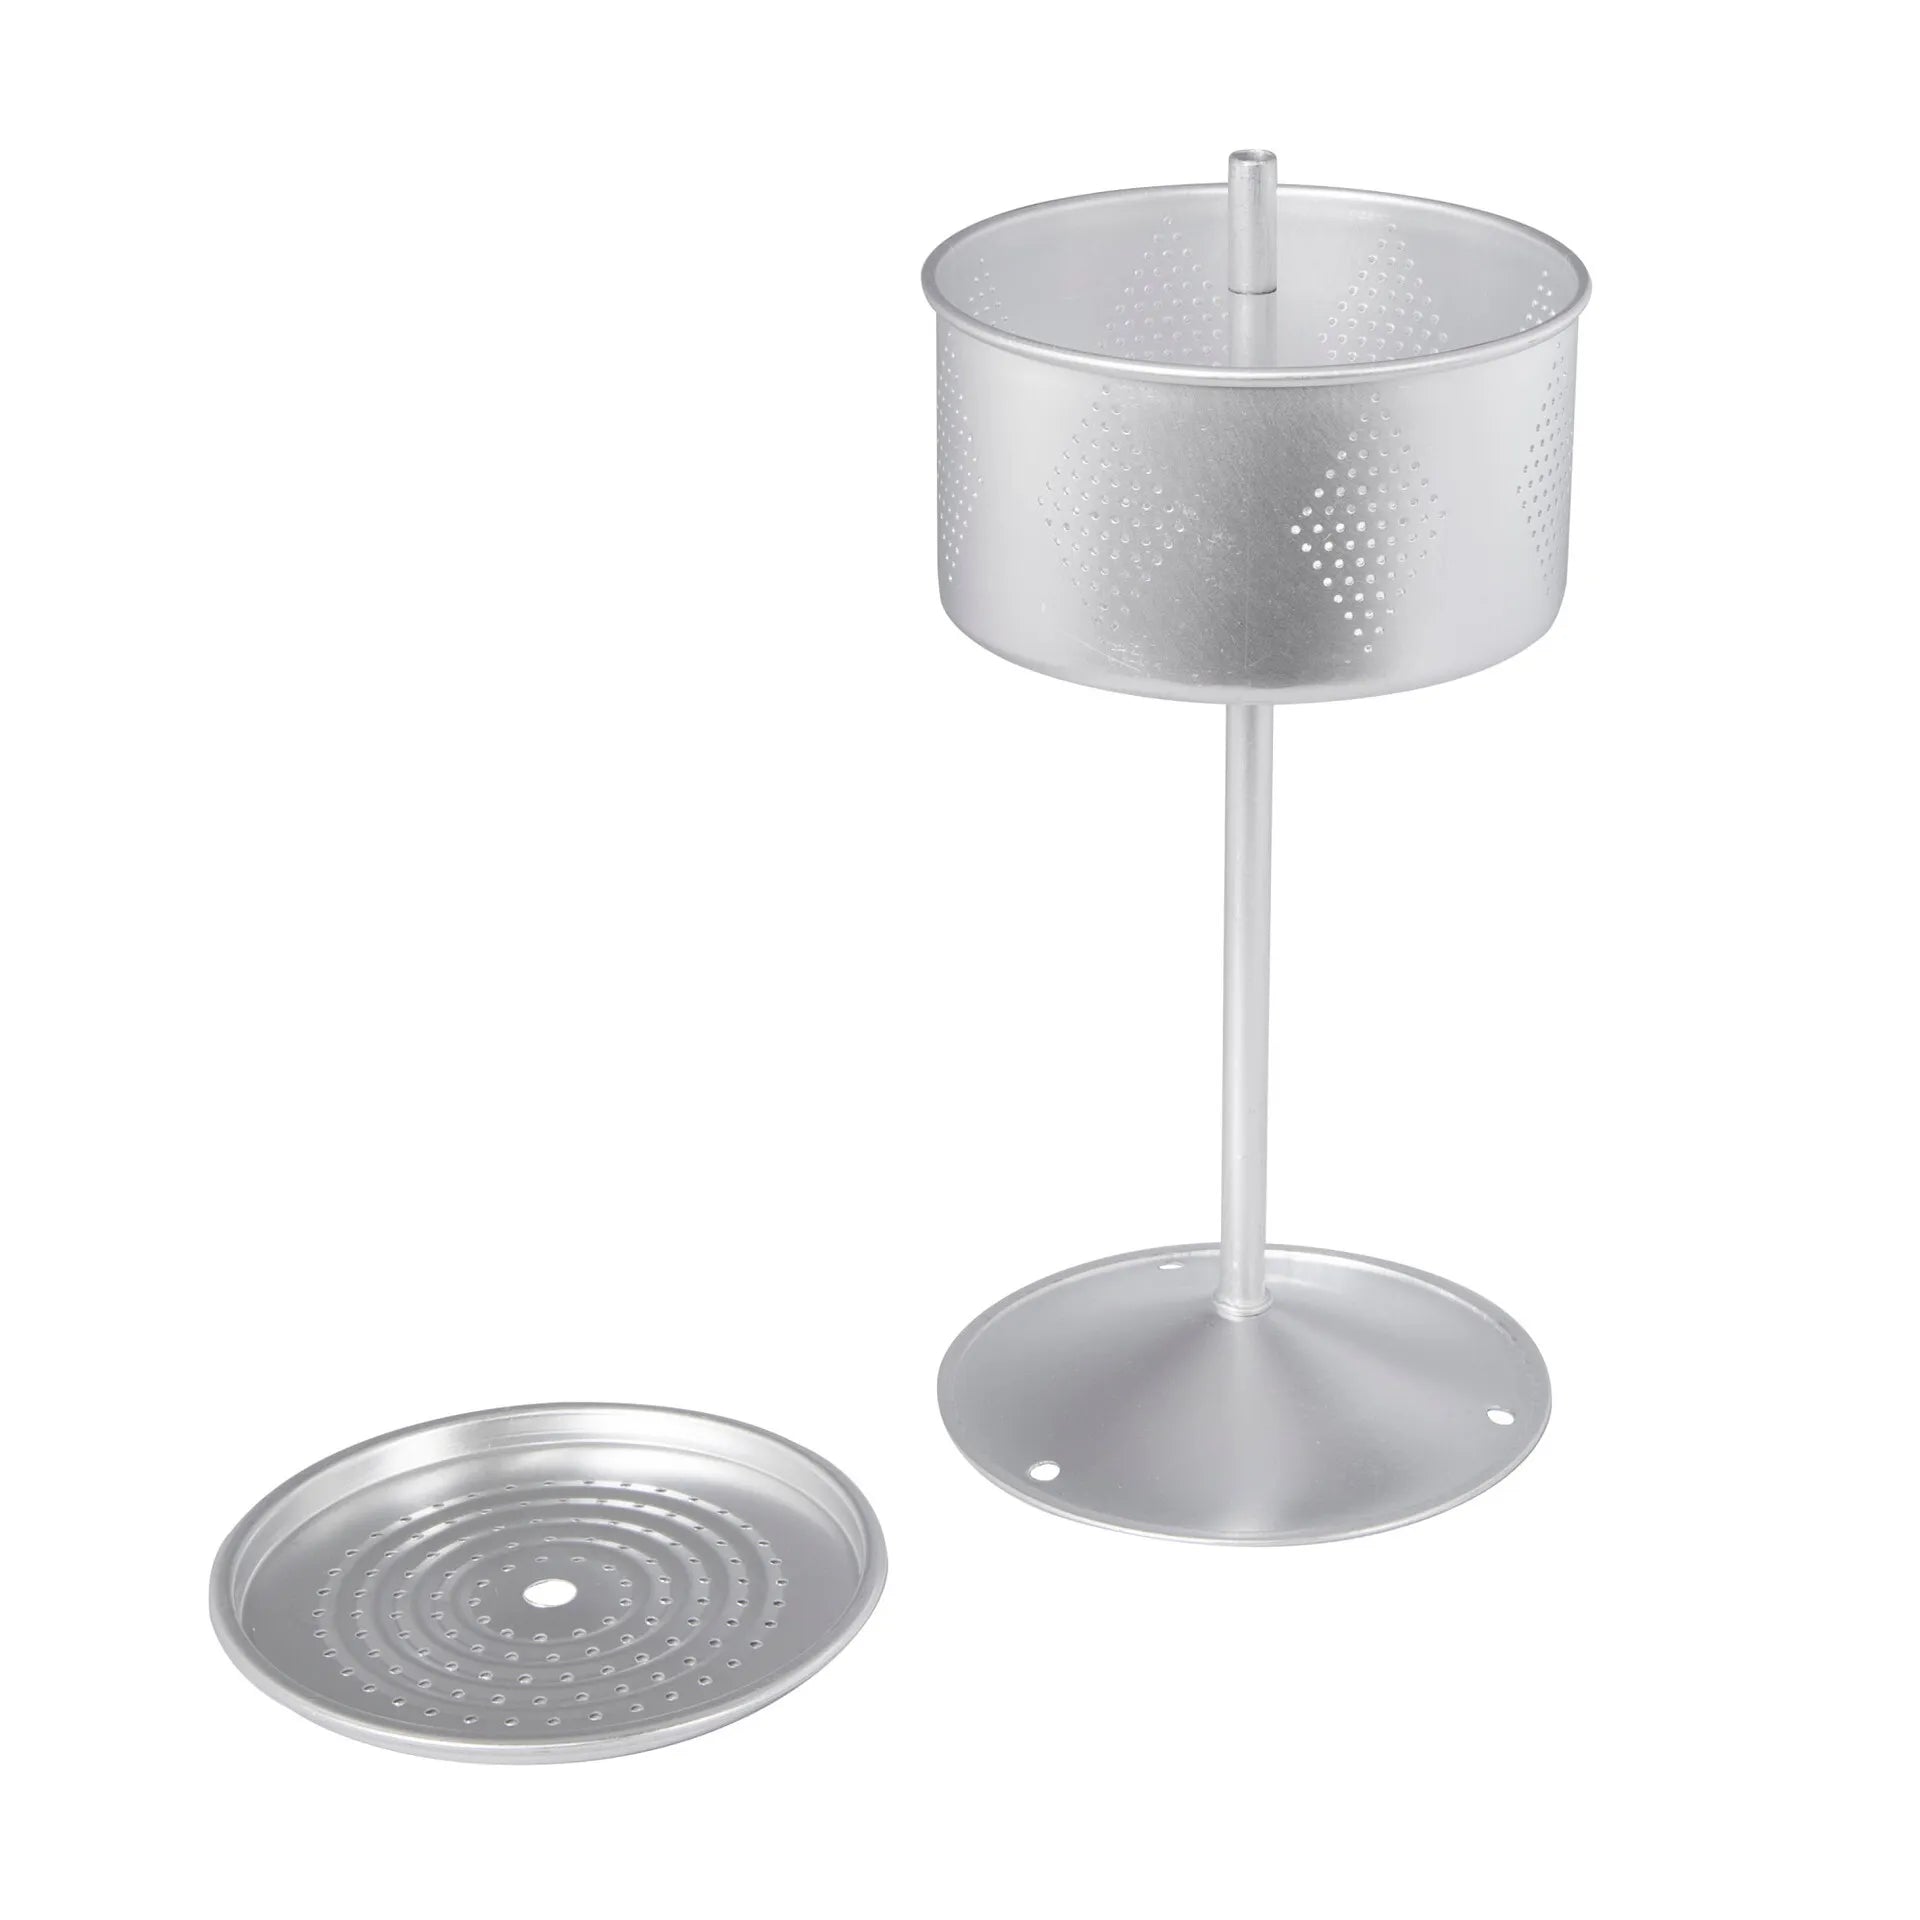 Aluminum Percolator Coffee Pot - 20 Cup